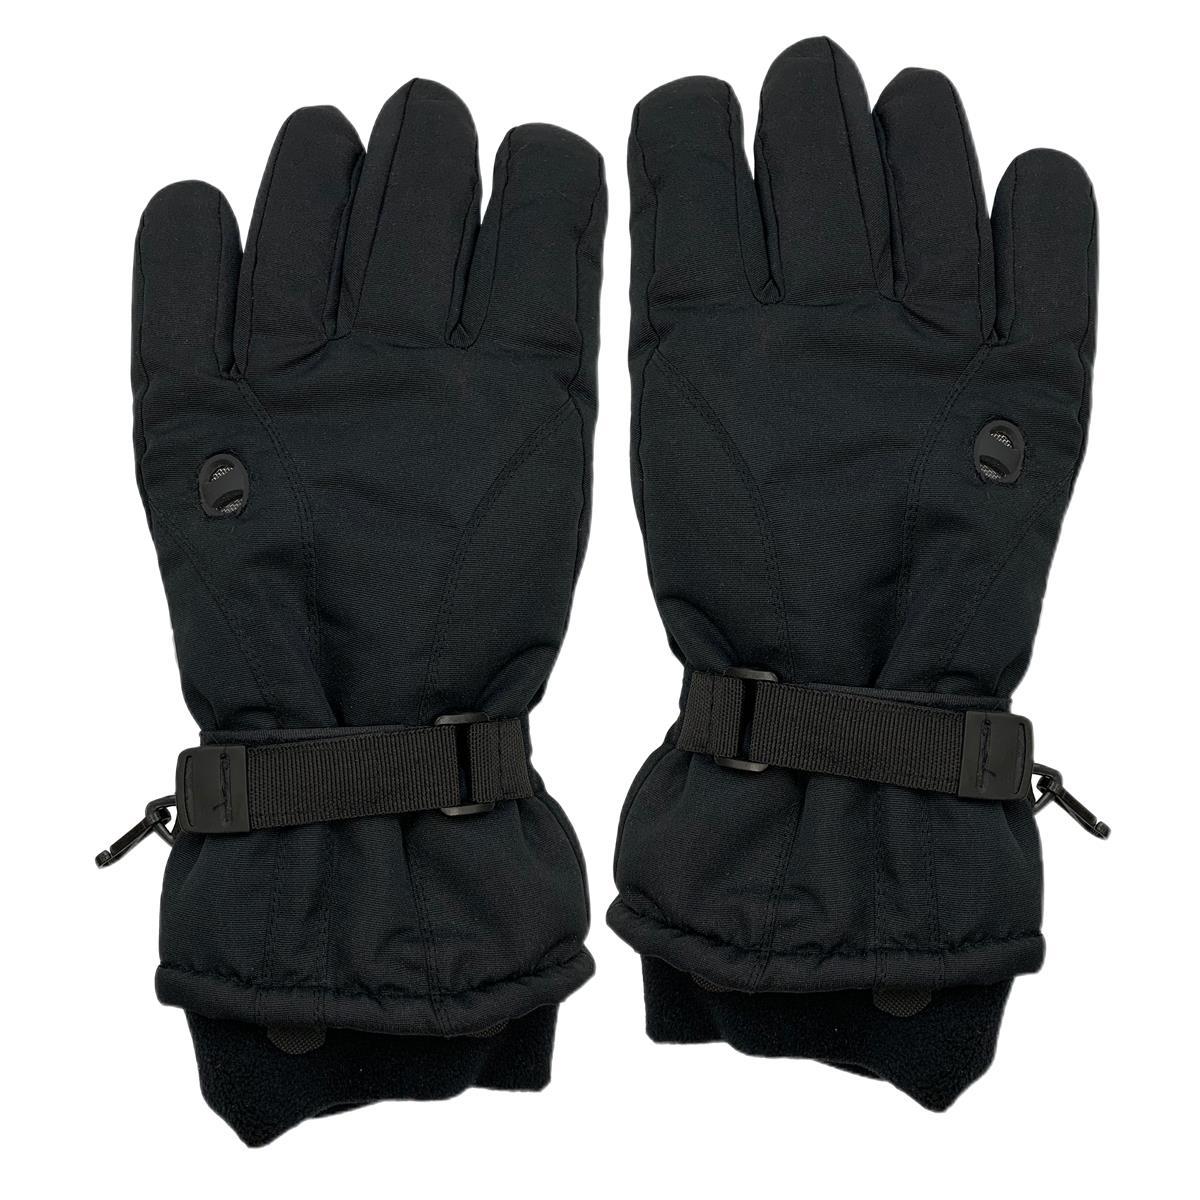 Winter's Edge Unisex Basic Glove